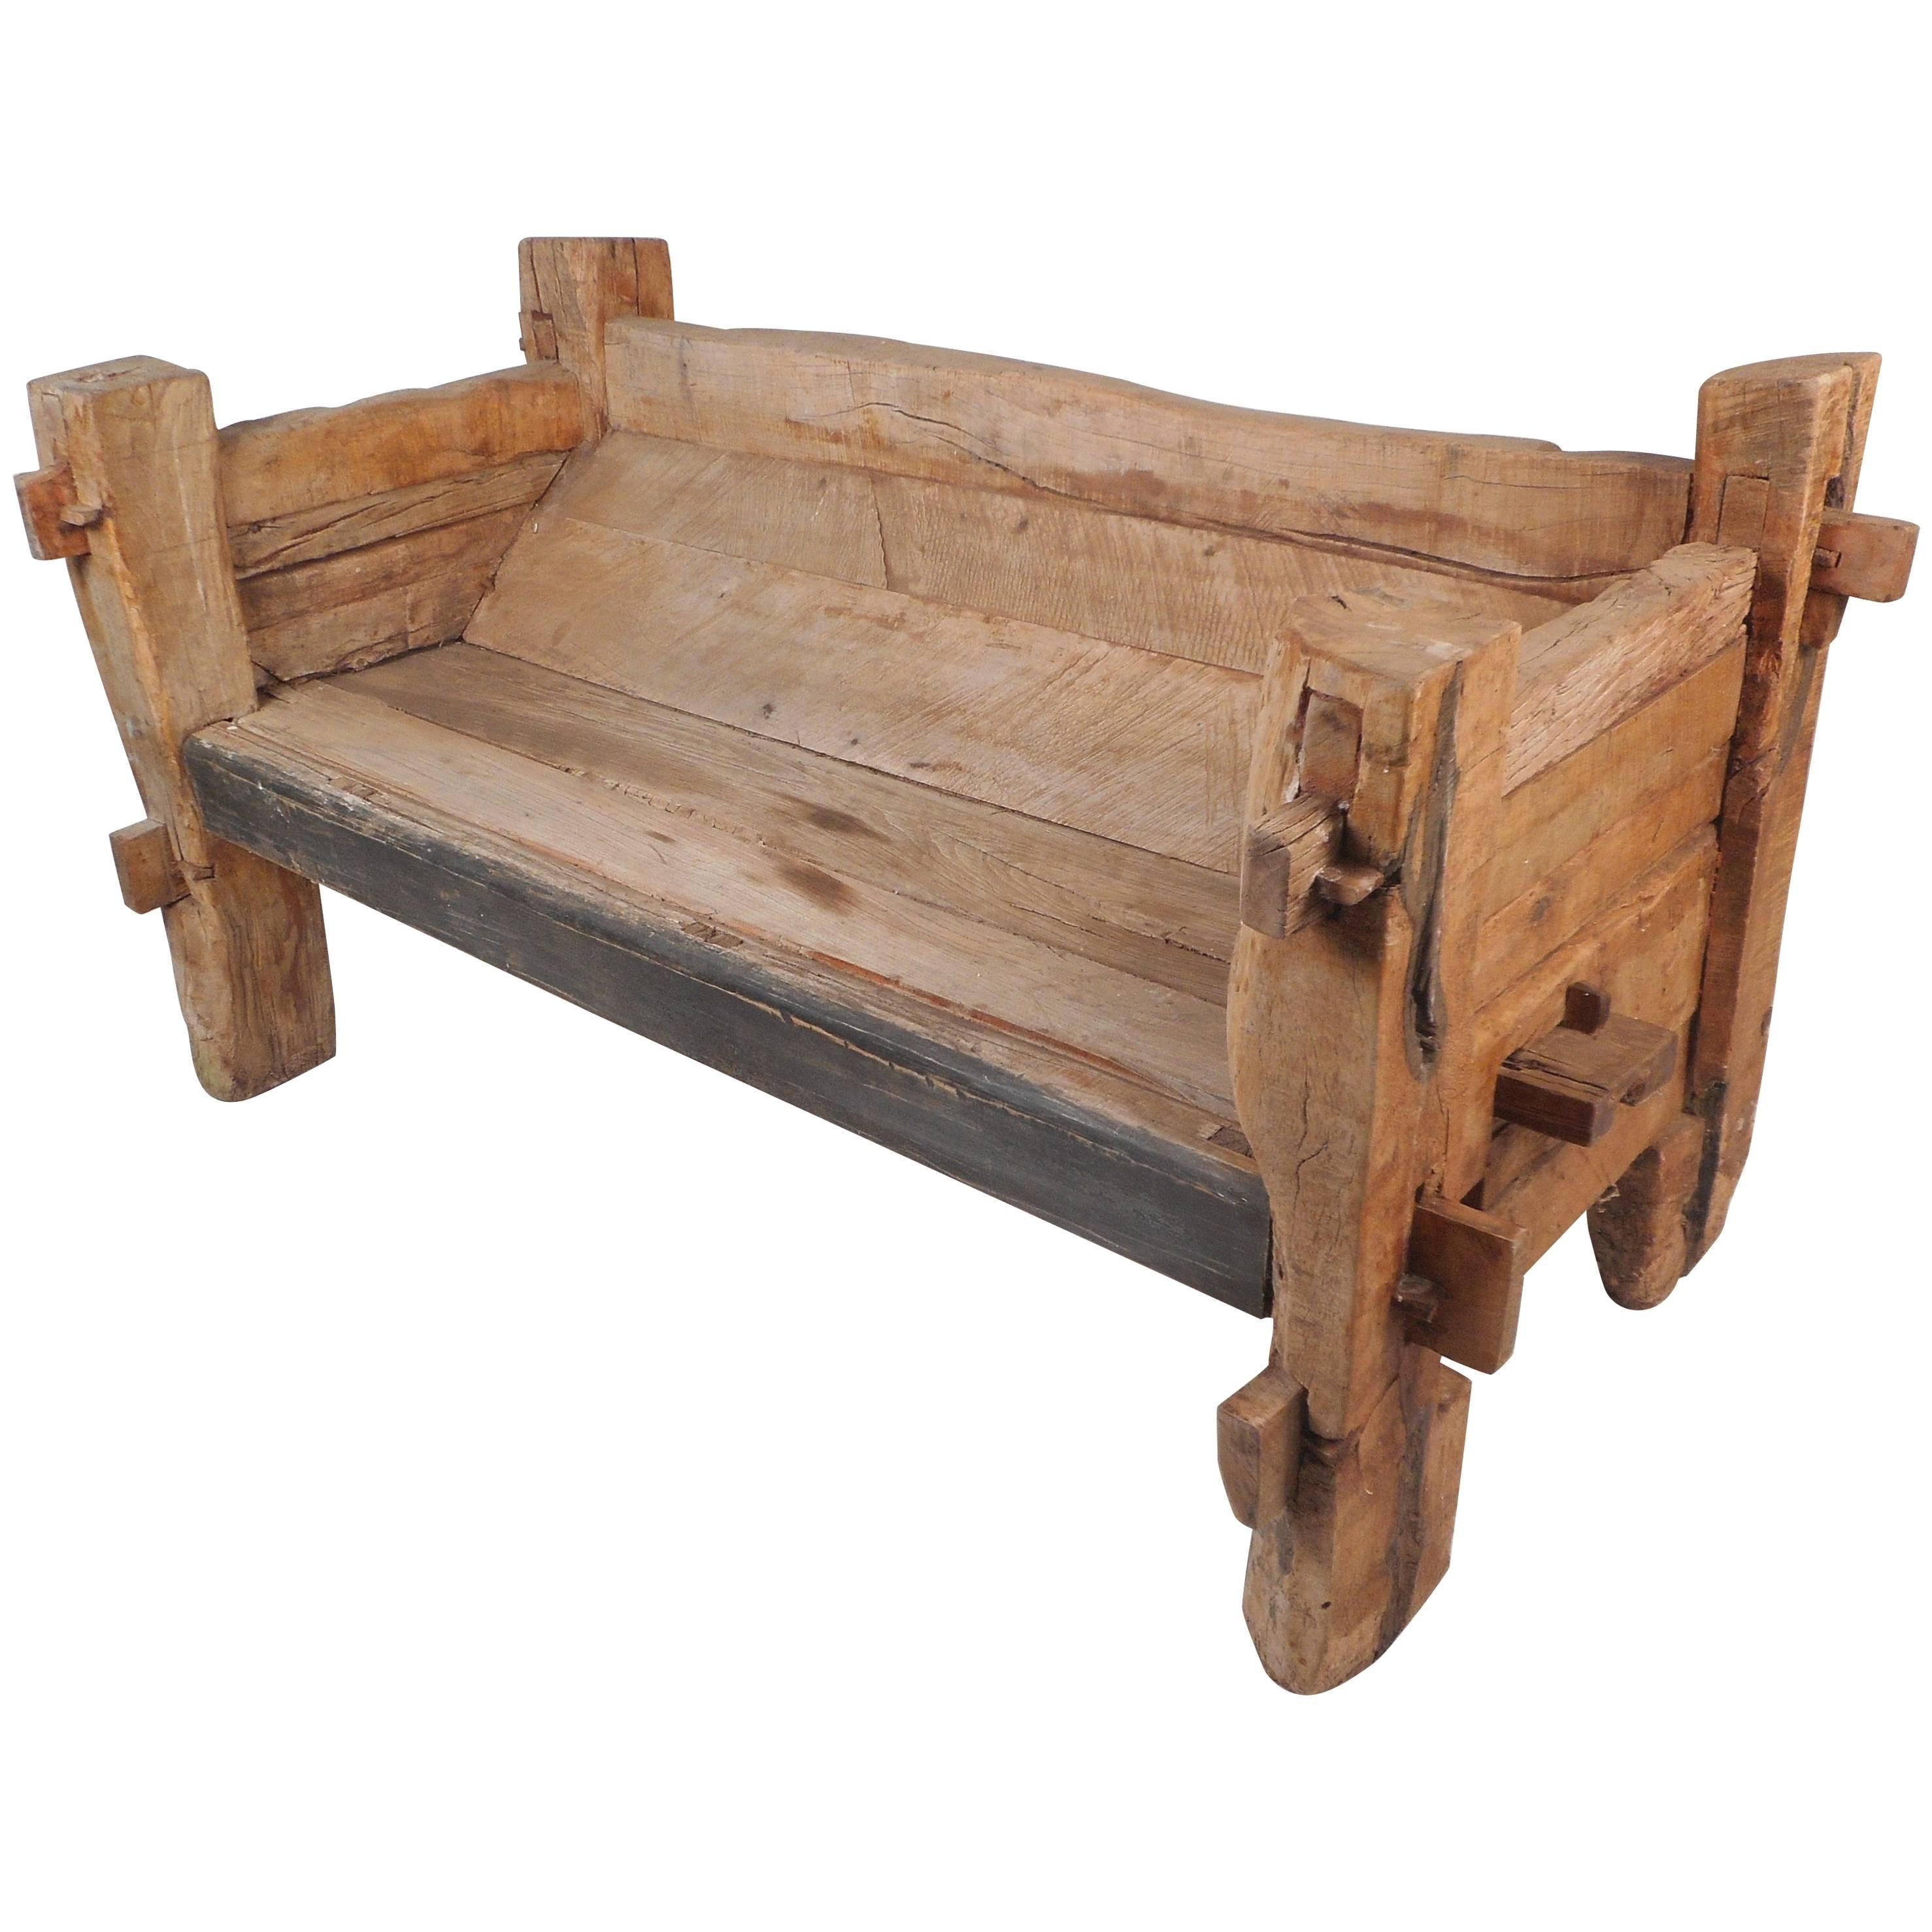 Impressive Rustic Wood Bench